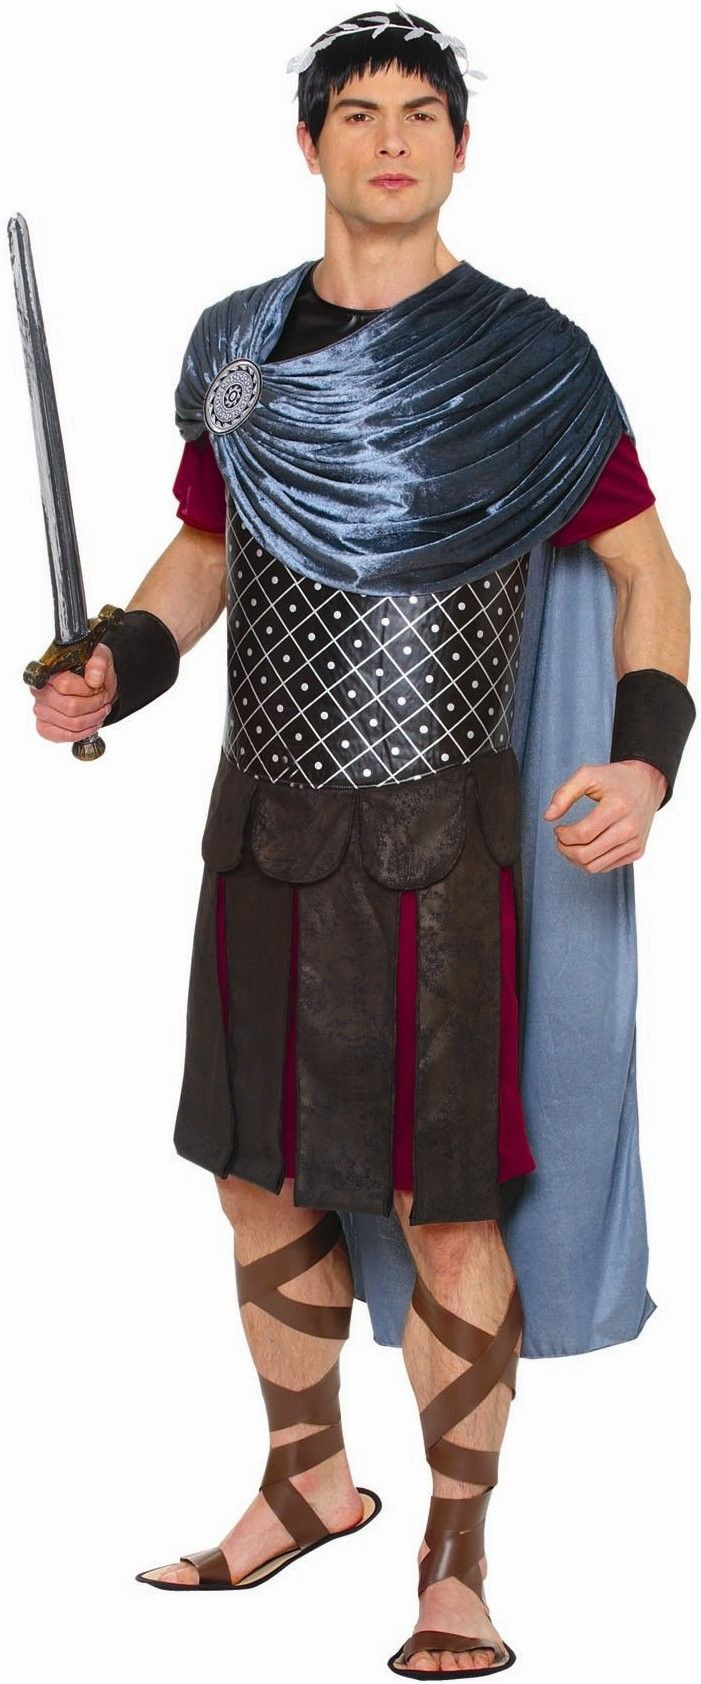 Best ideas about DIY Roman Costume
. Save or Pin 25 unique Roman costumes ideas on Pinterest Now.